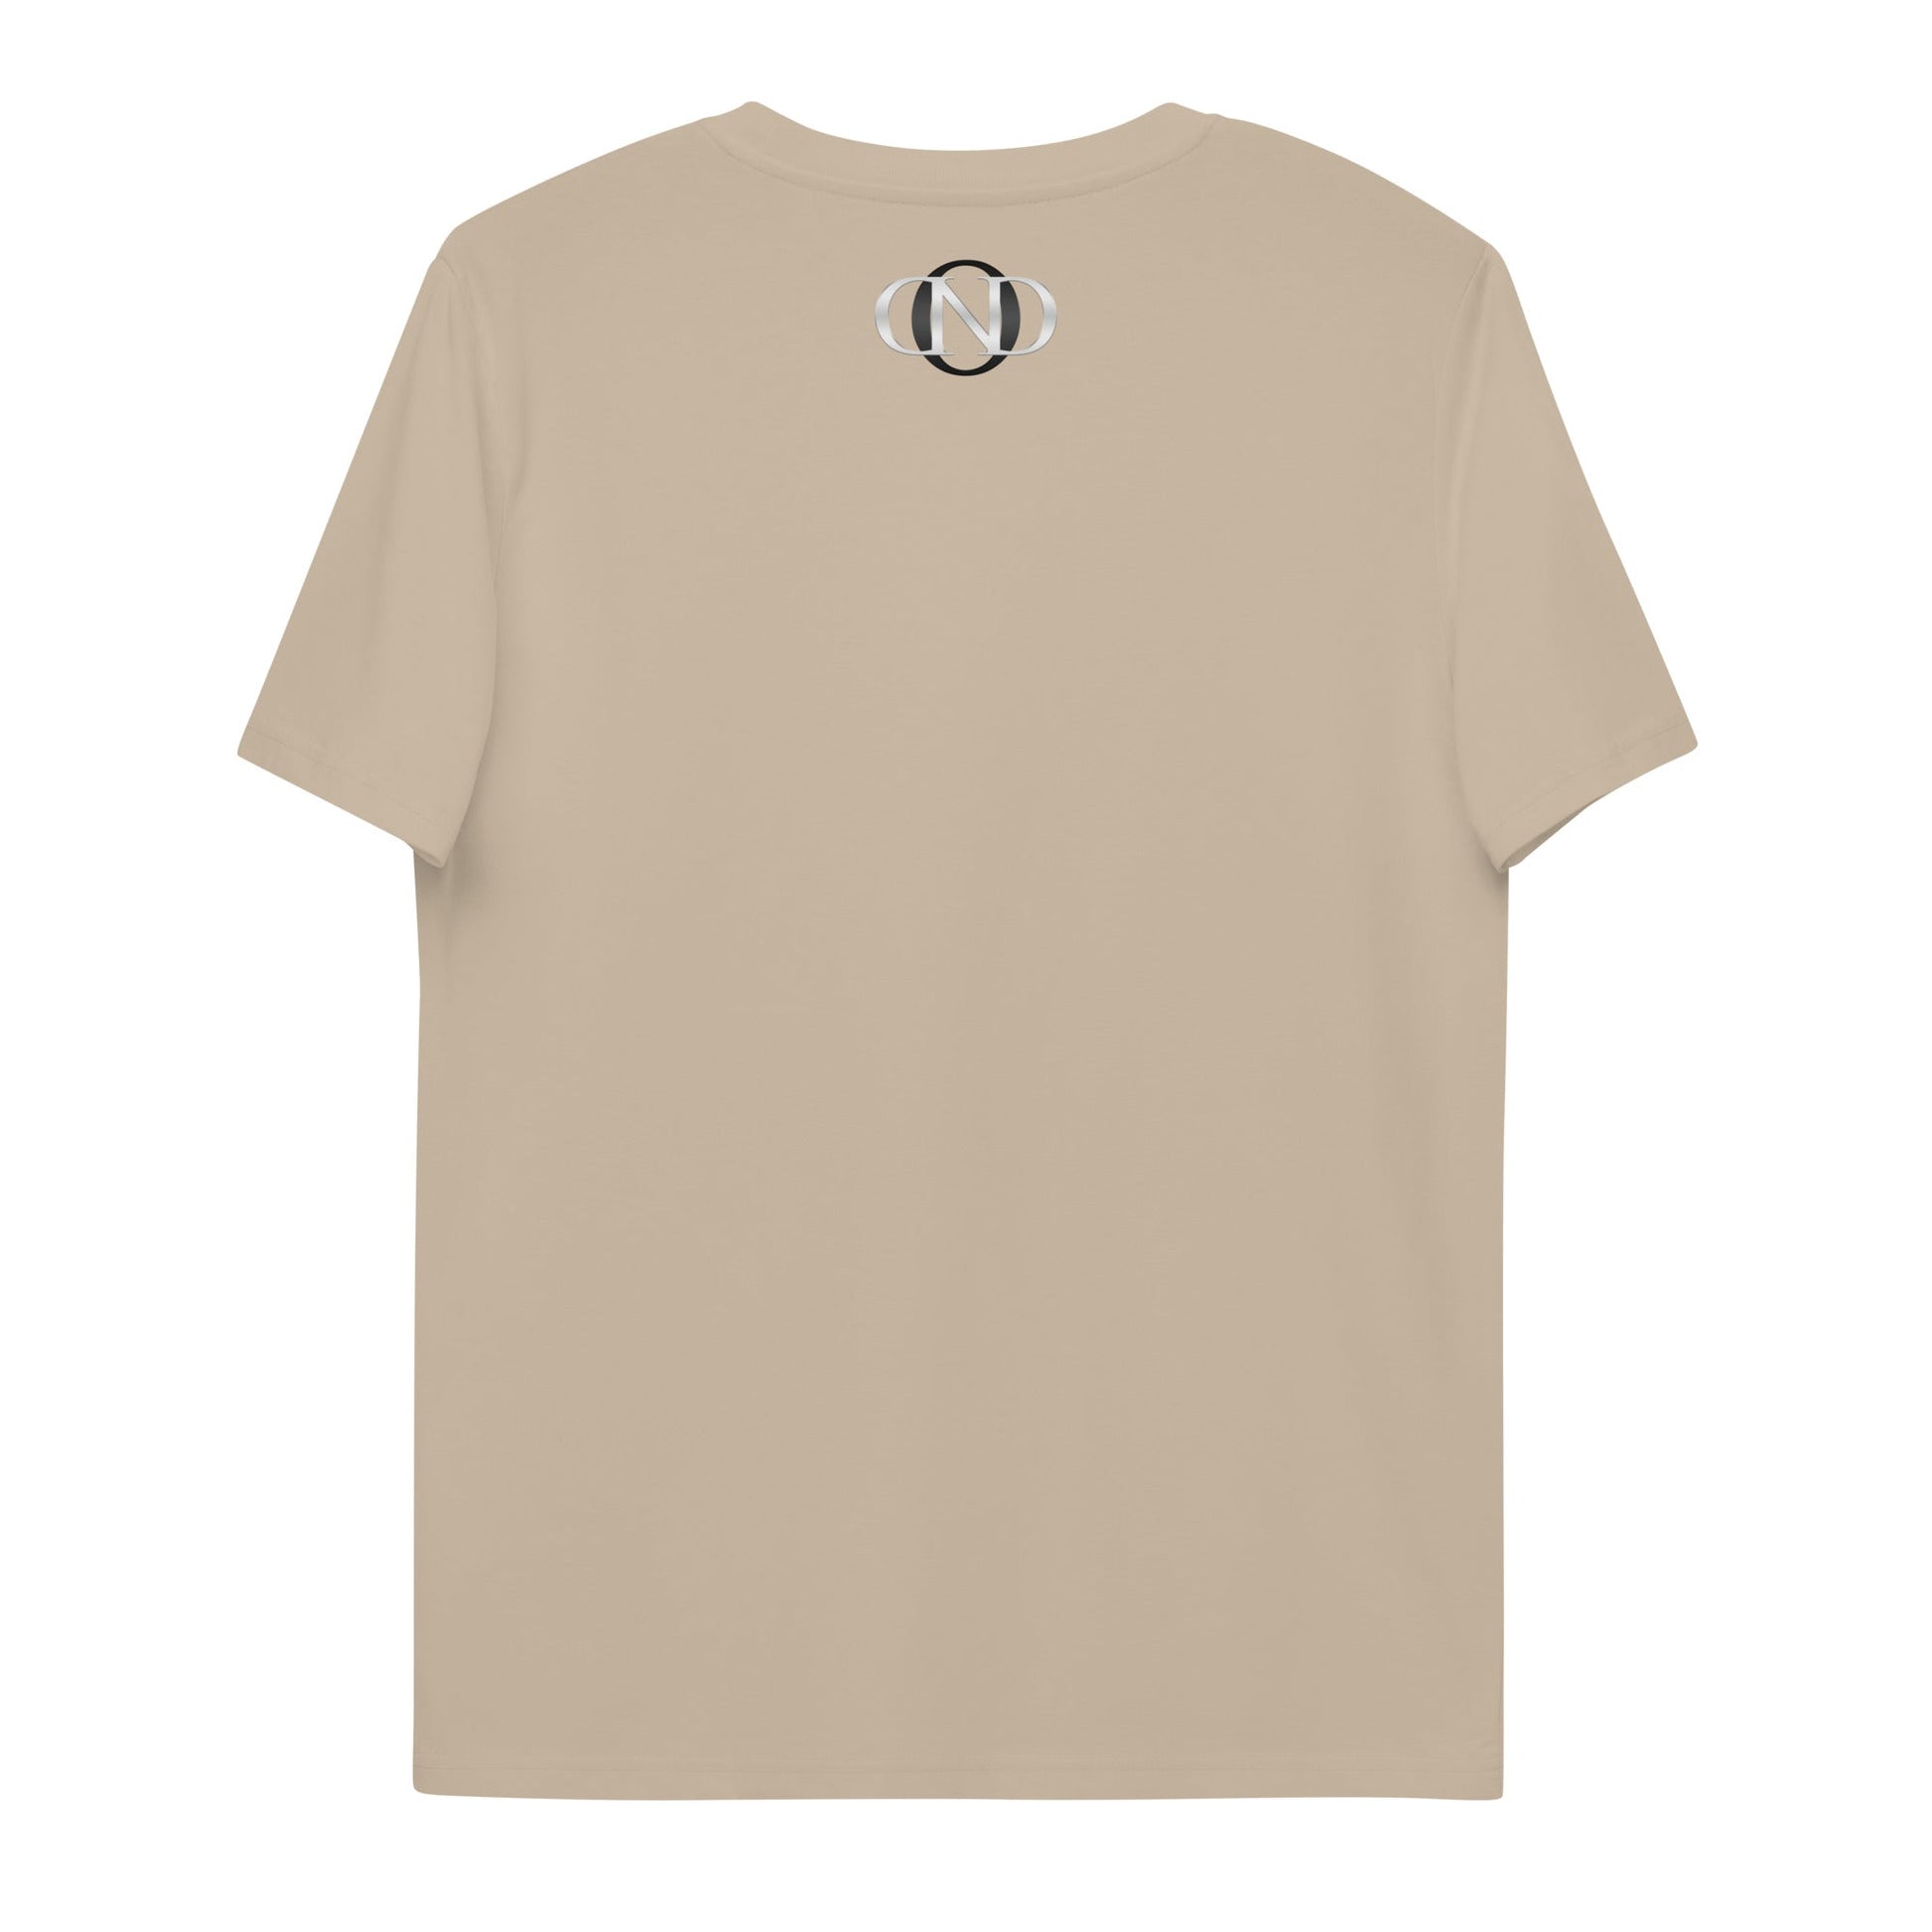 22 Neduz Designs Unisex Socialliberalerna Framtid T-Shirt -